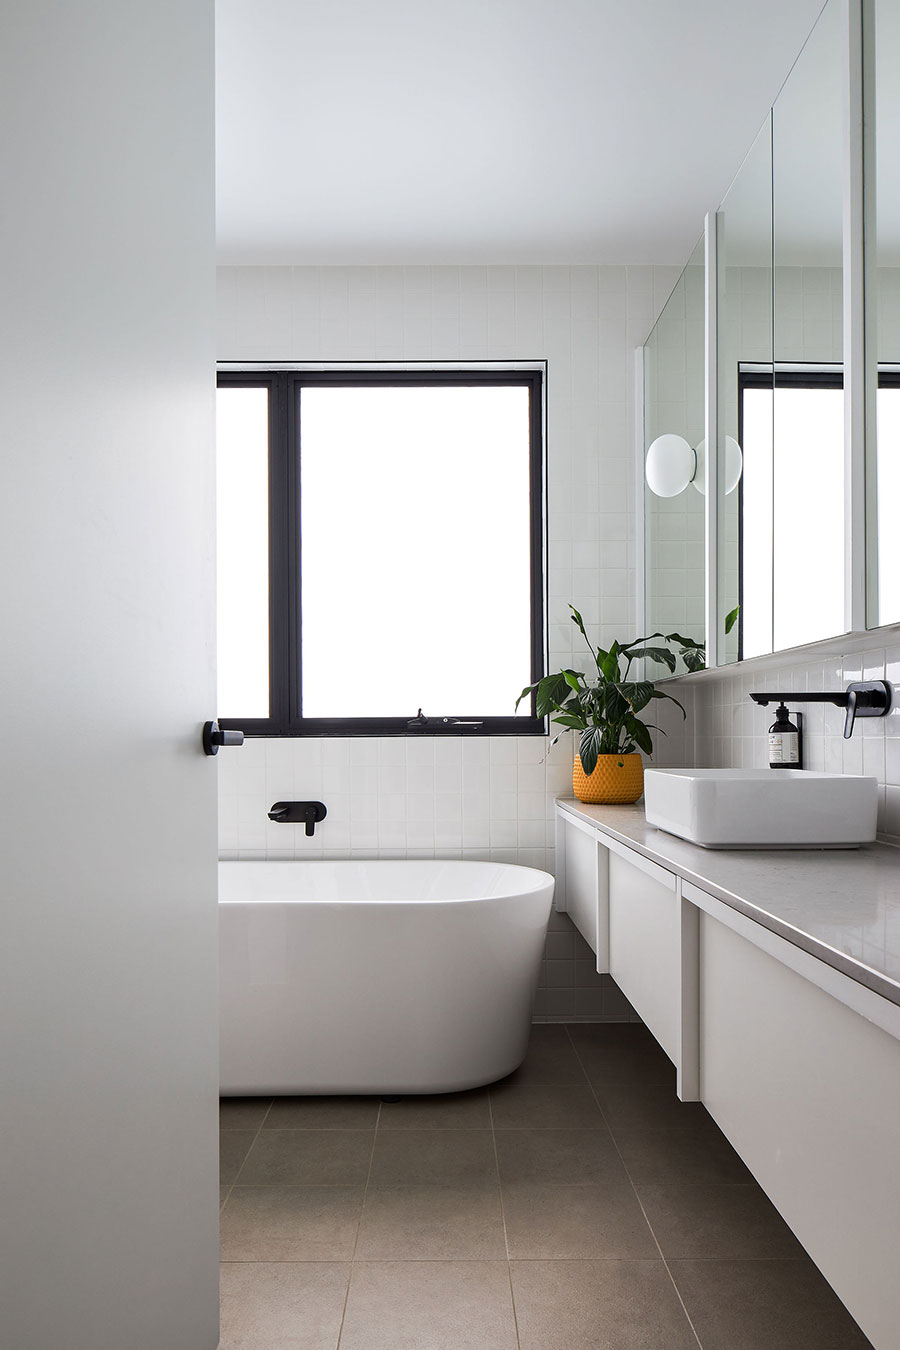 SMITH Architects modern family home bathroom